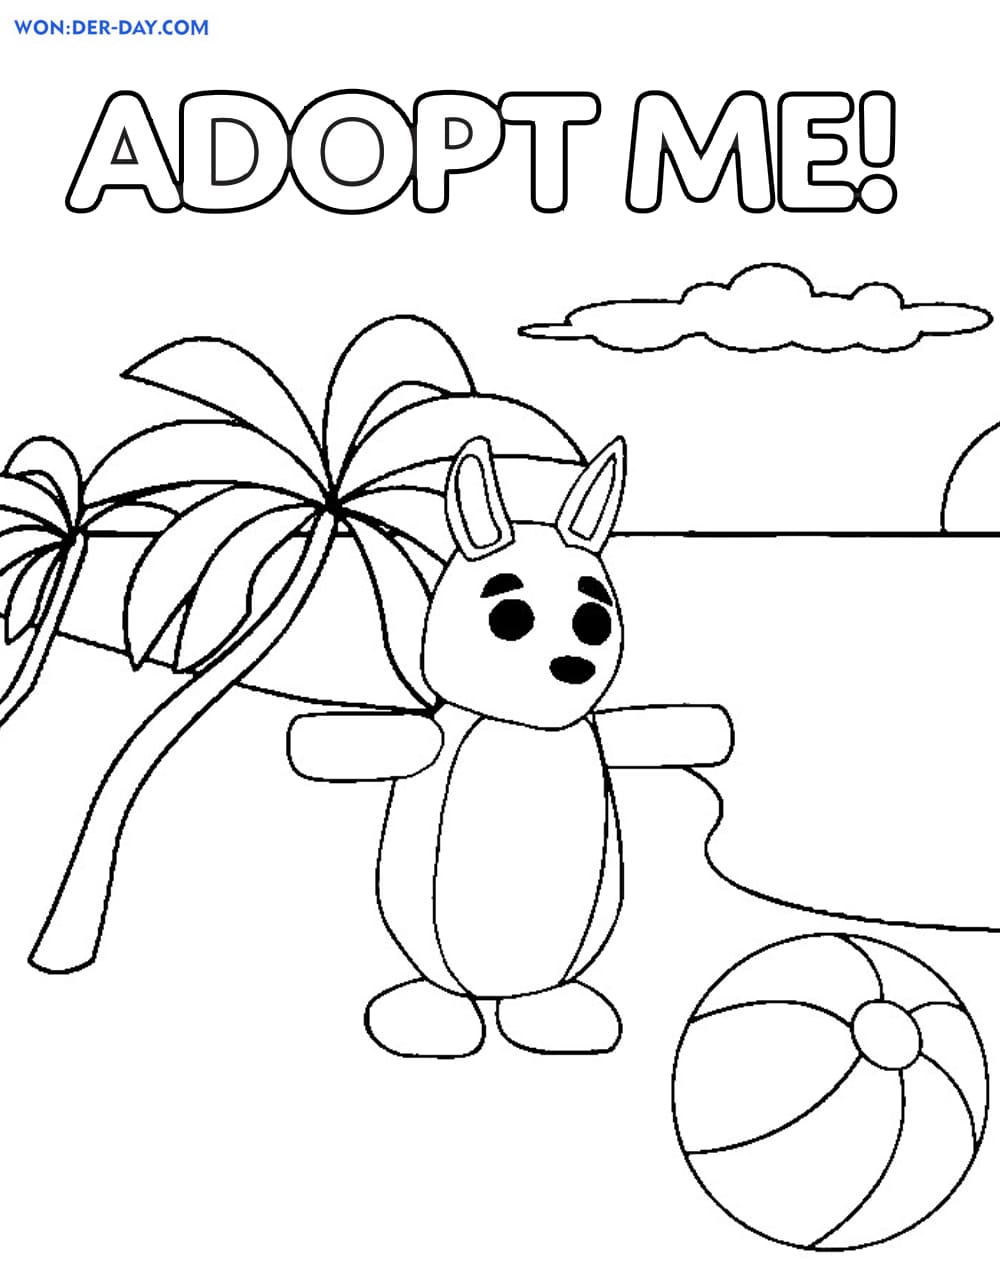 Dibujos Para Colorear Adopt Me Imprime Gratis Wonder Day Com - dibujos para colorear roblox adopt me